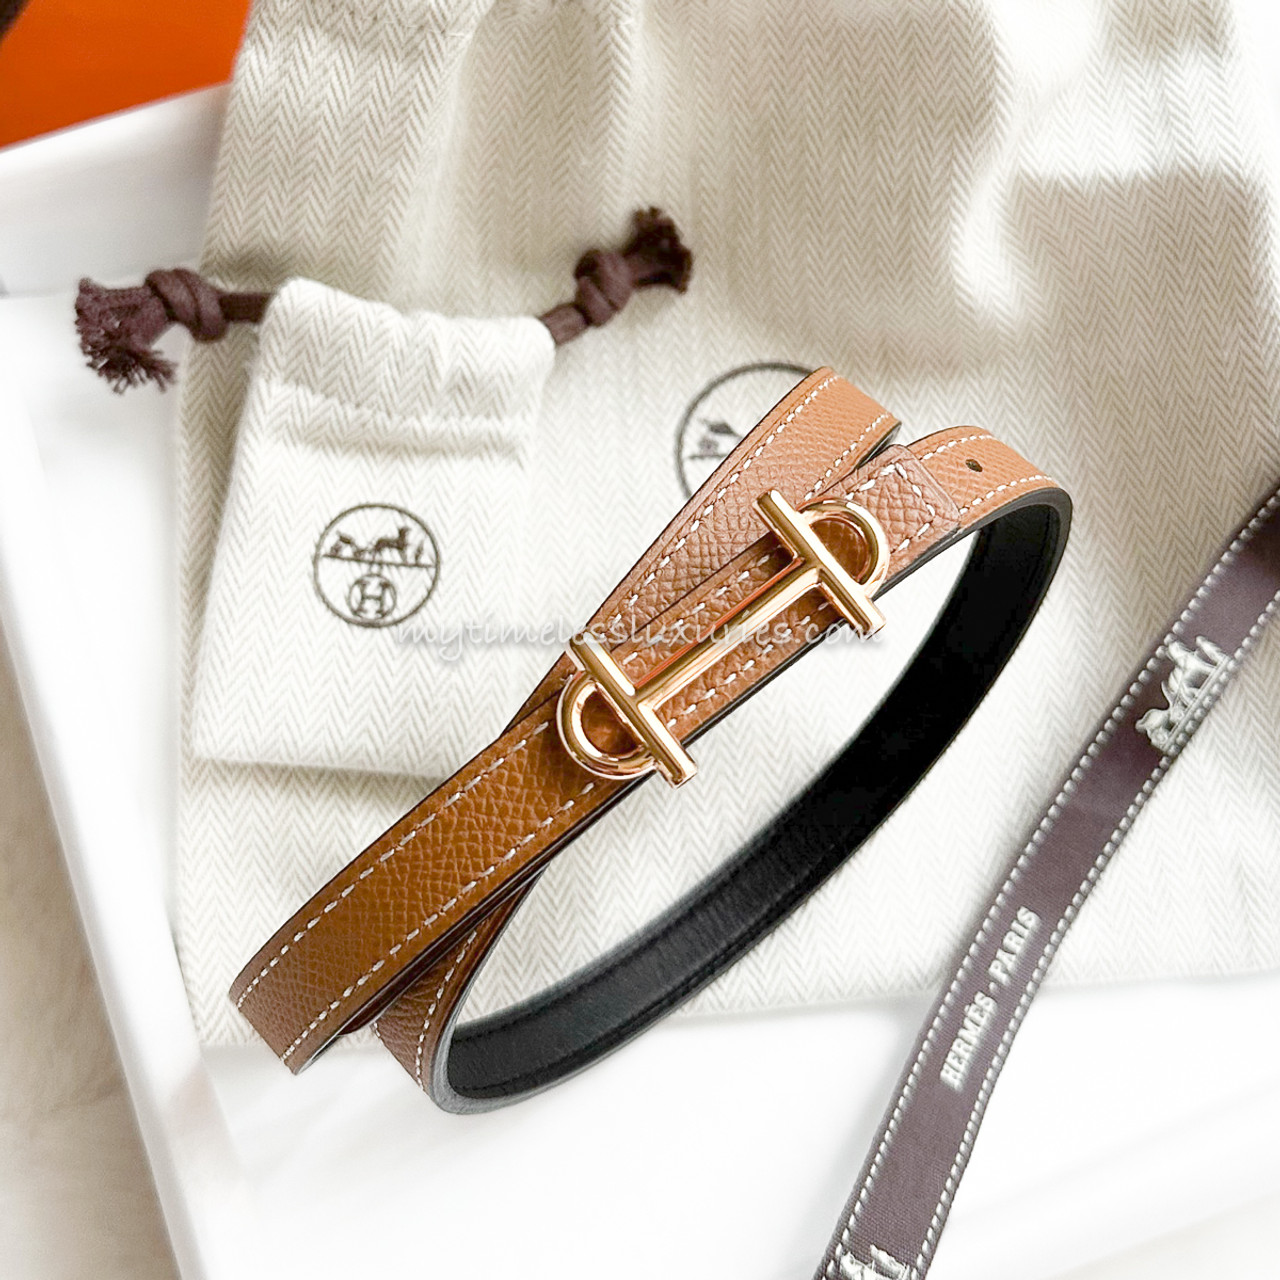 Premier reversible leather belt